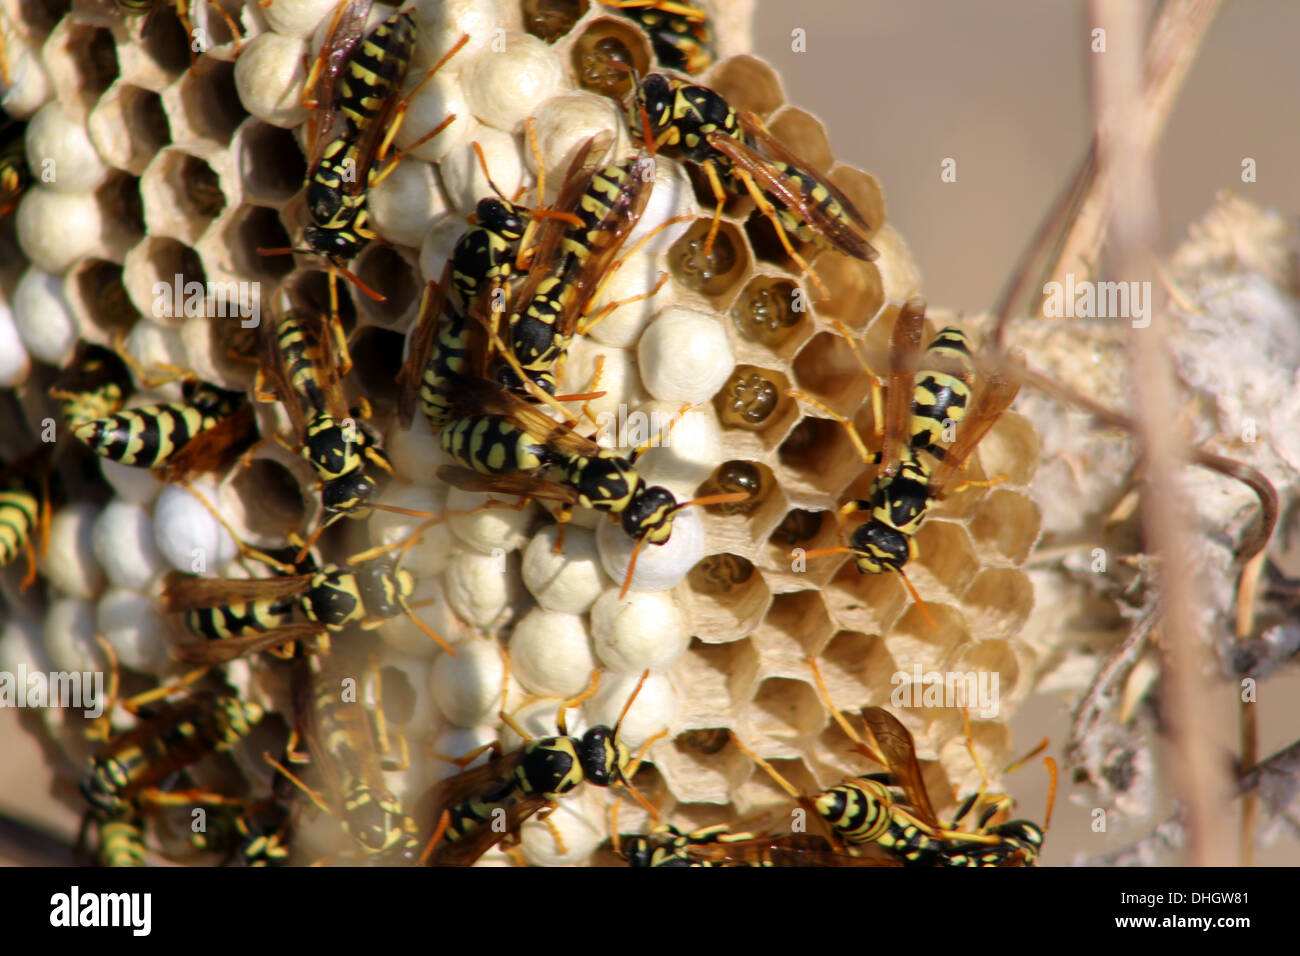 Wasp hive and larvas Stock Photo